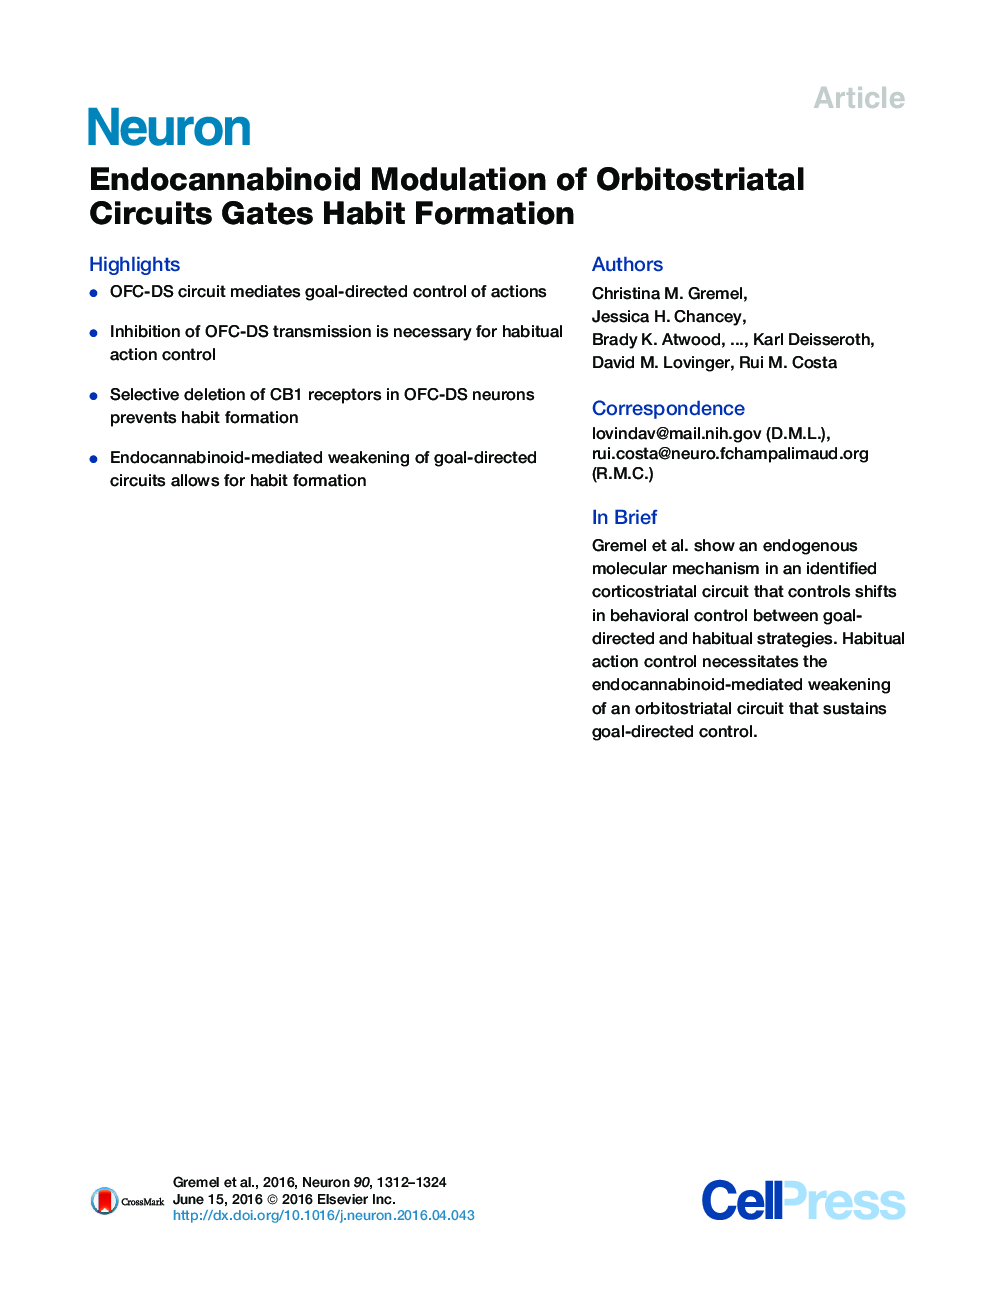 Endocannabinoid Modulation of Orbitostriatal Circuits Gates Habit Formation